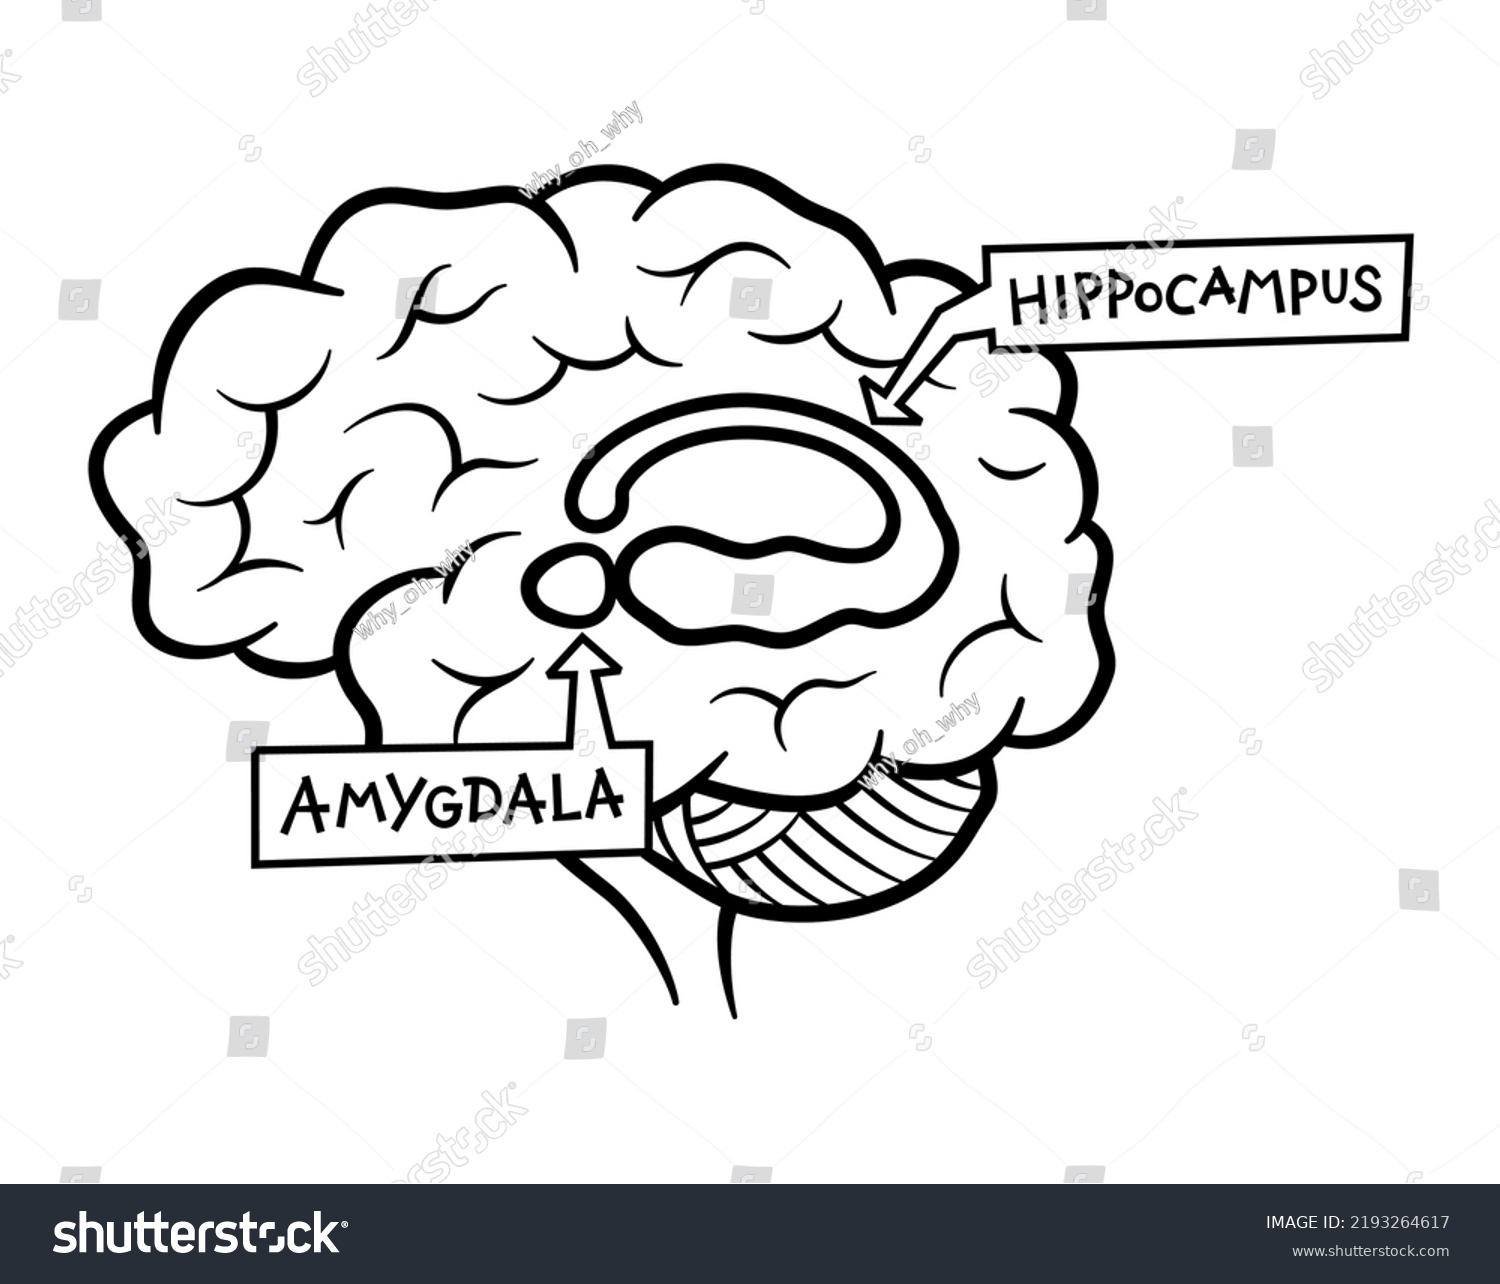 SVG of Human brain structure anatomy illustration: hippocampus and amygdala svg